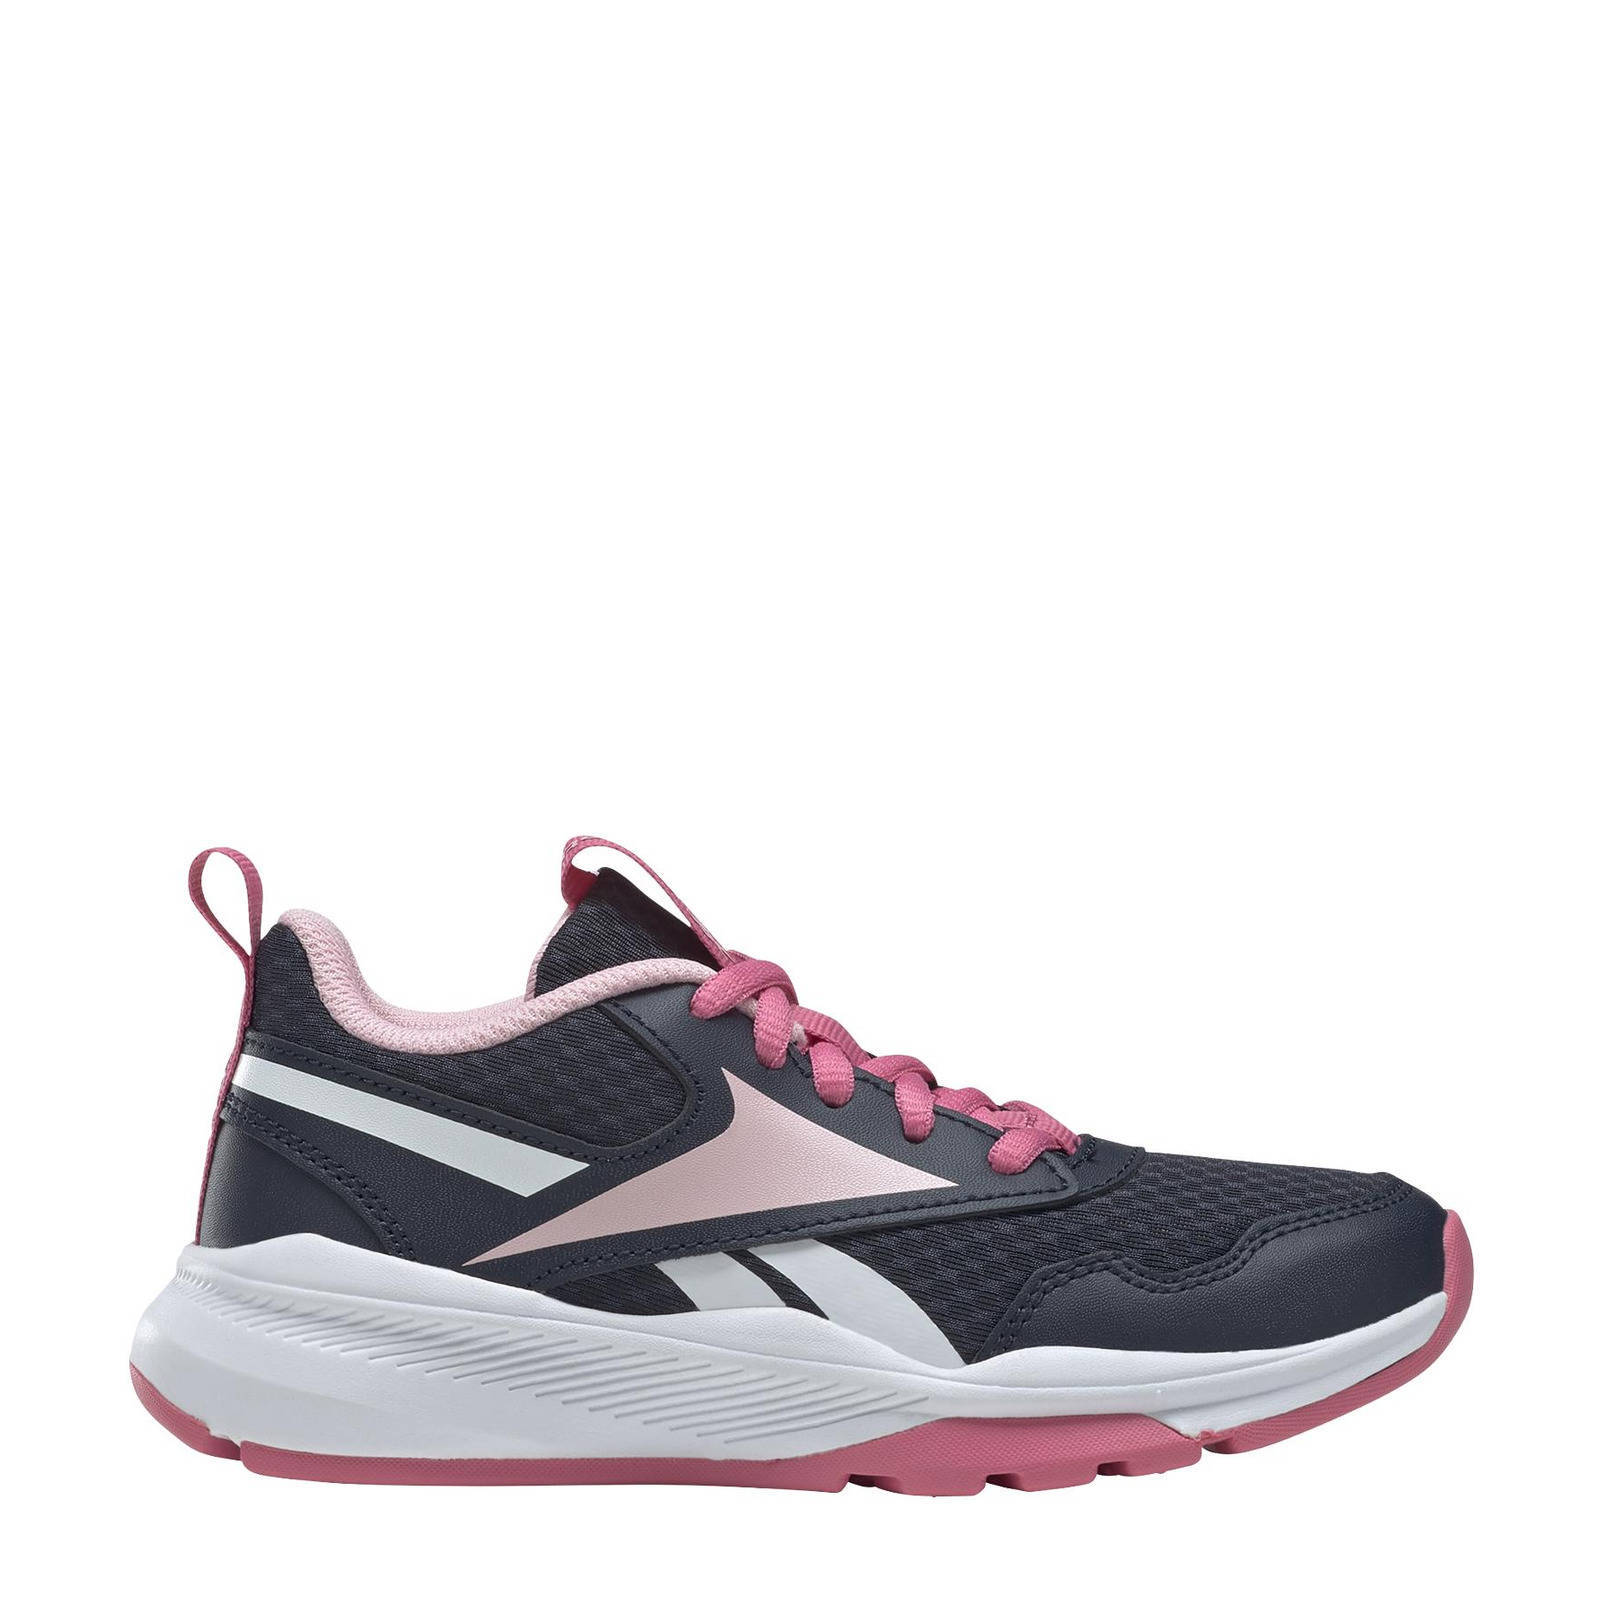 Reebok Training XT Sprinter 2.0 sportschoenen donkerblauw/roze online kopen